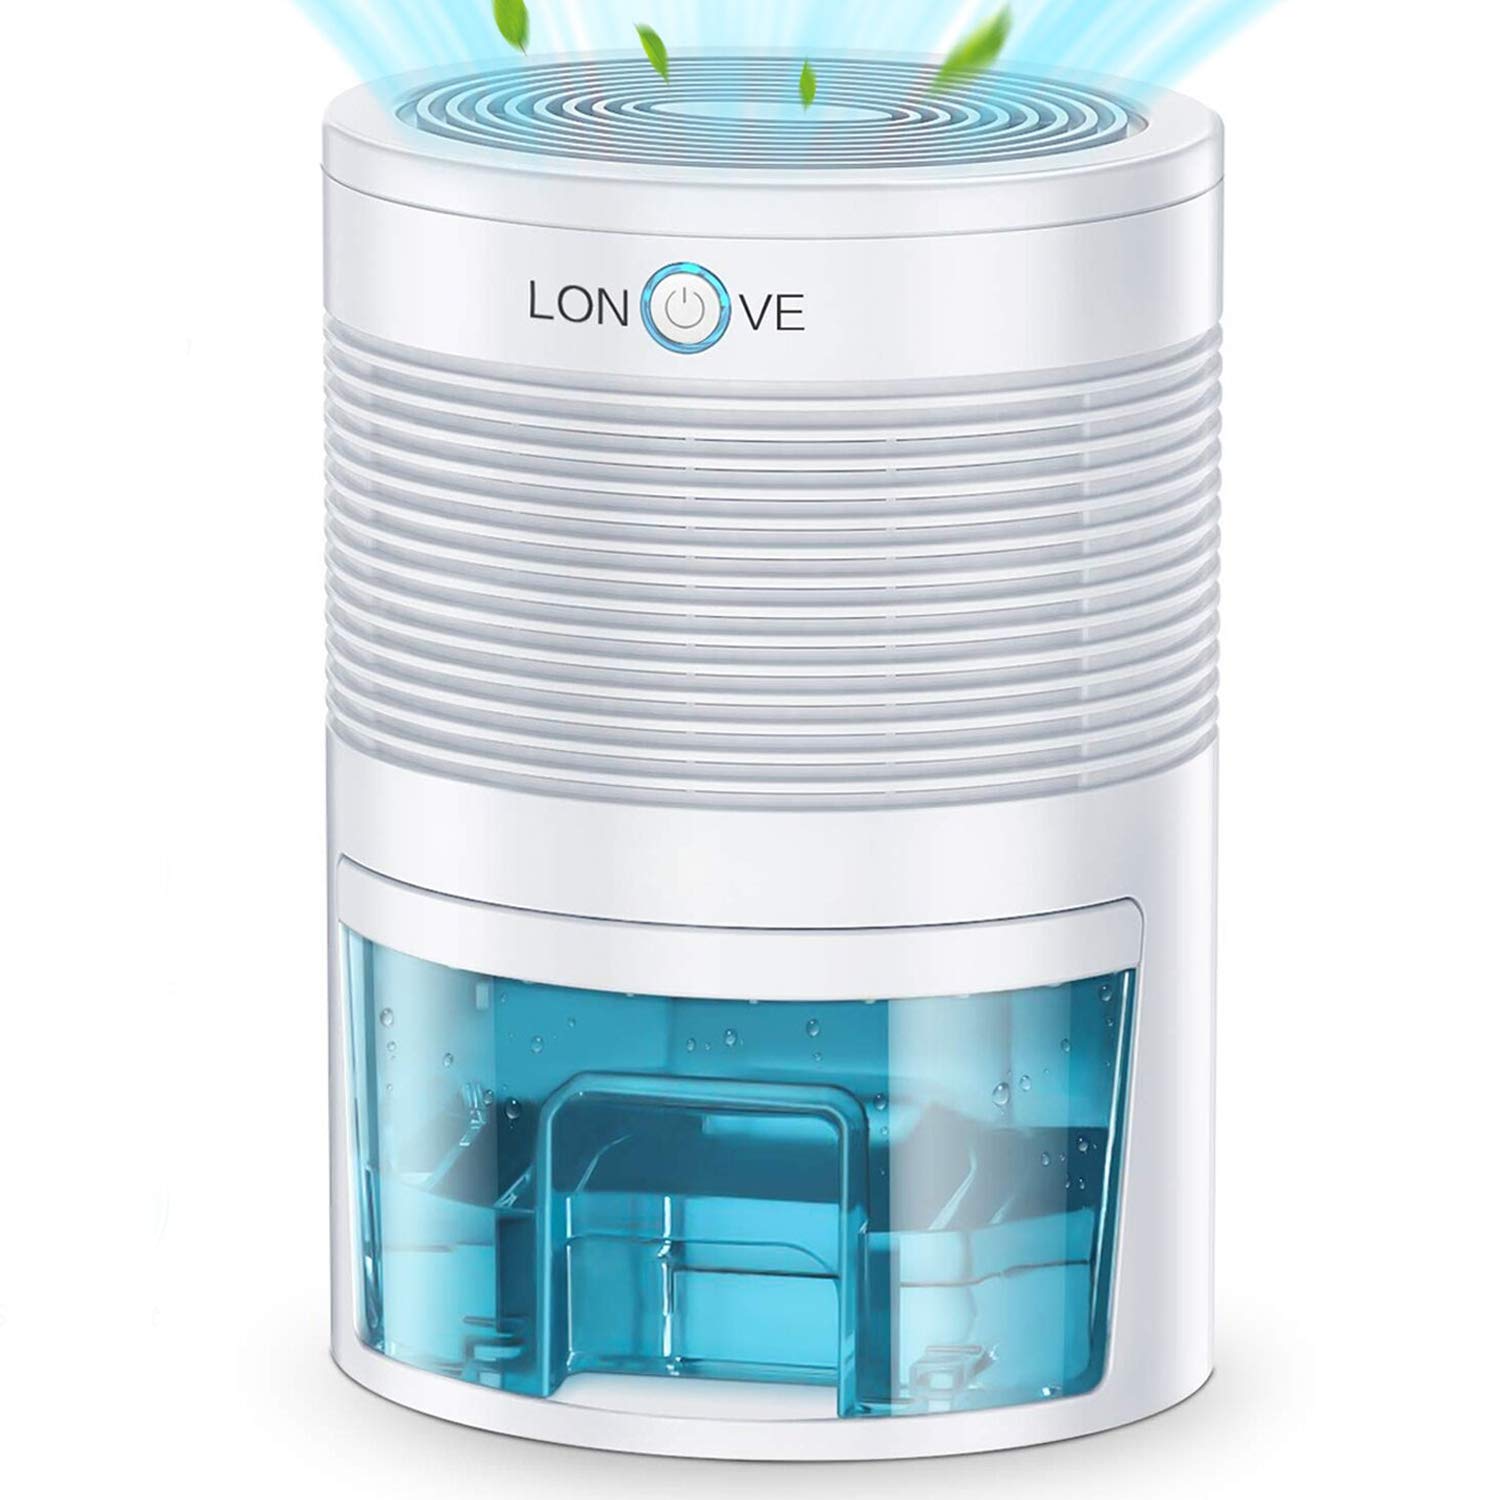 lonove-portable-electric-mini-dehumidifier-27-counce-small-dehumidifier